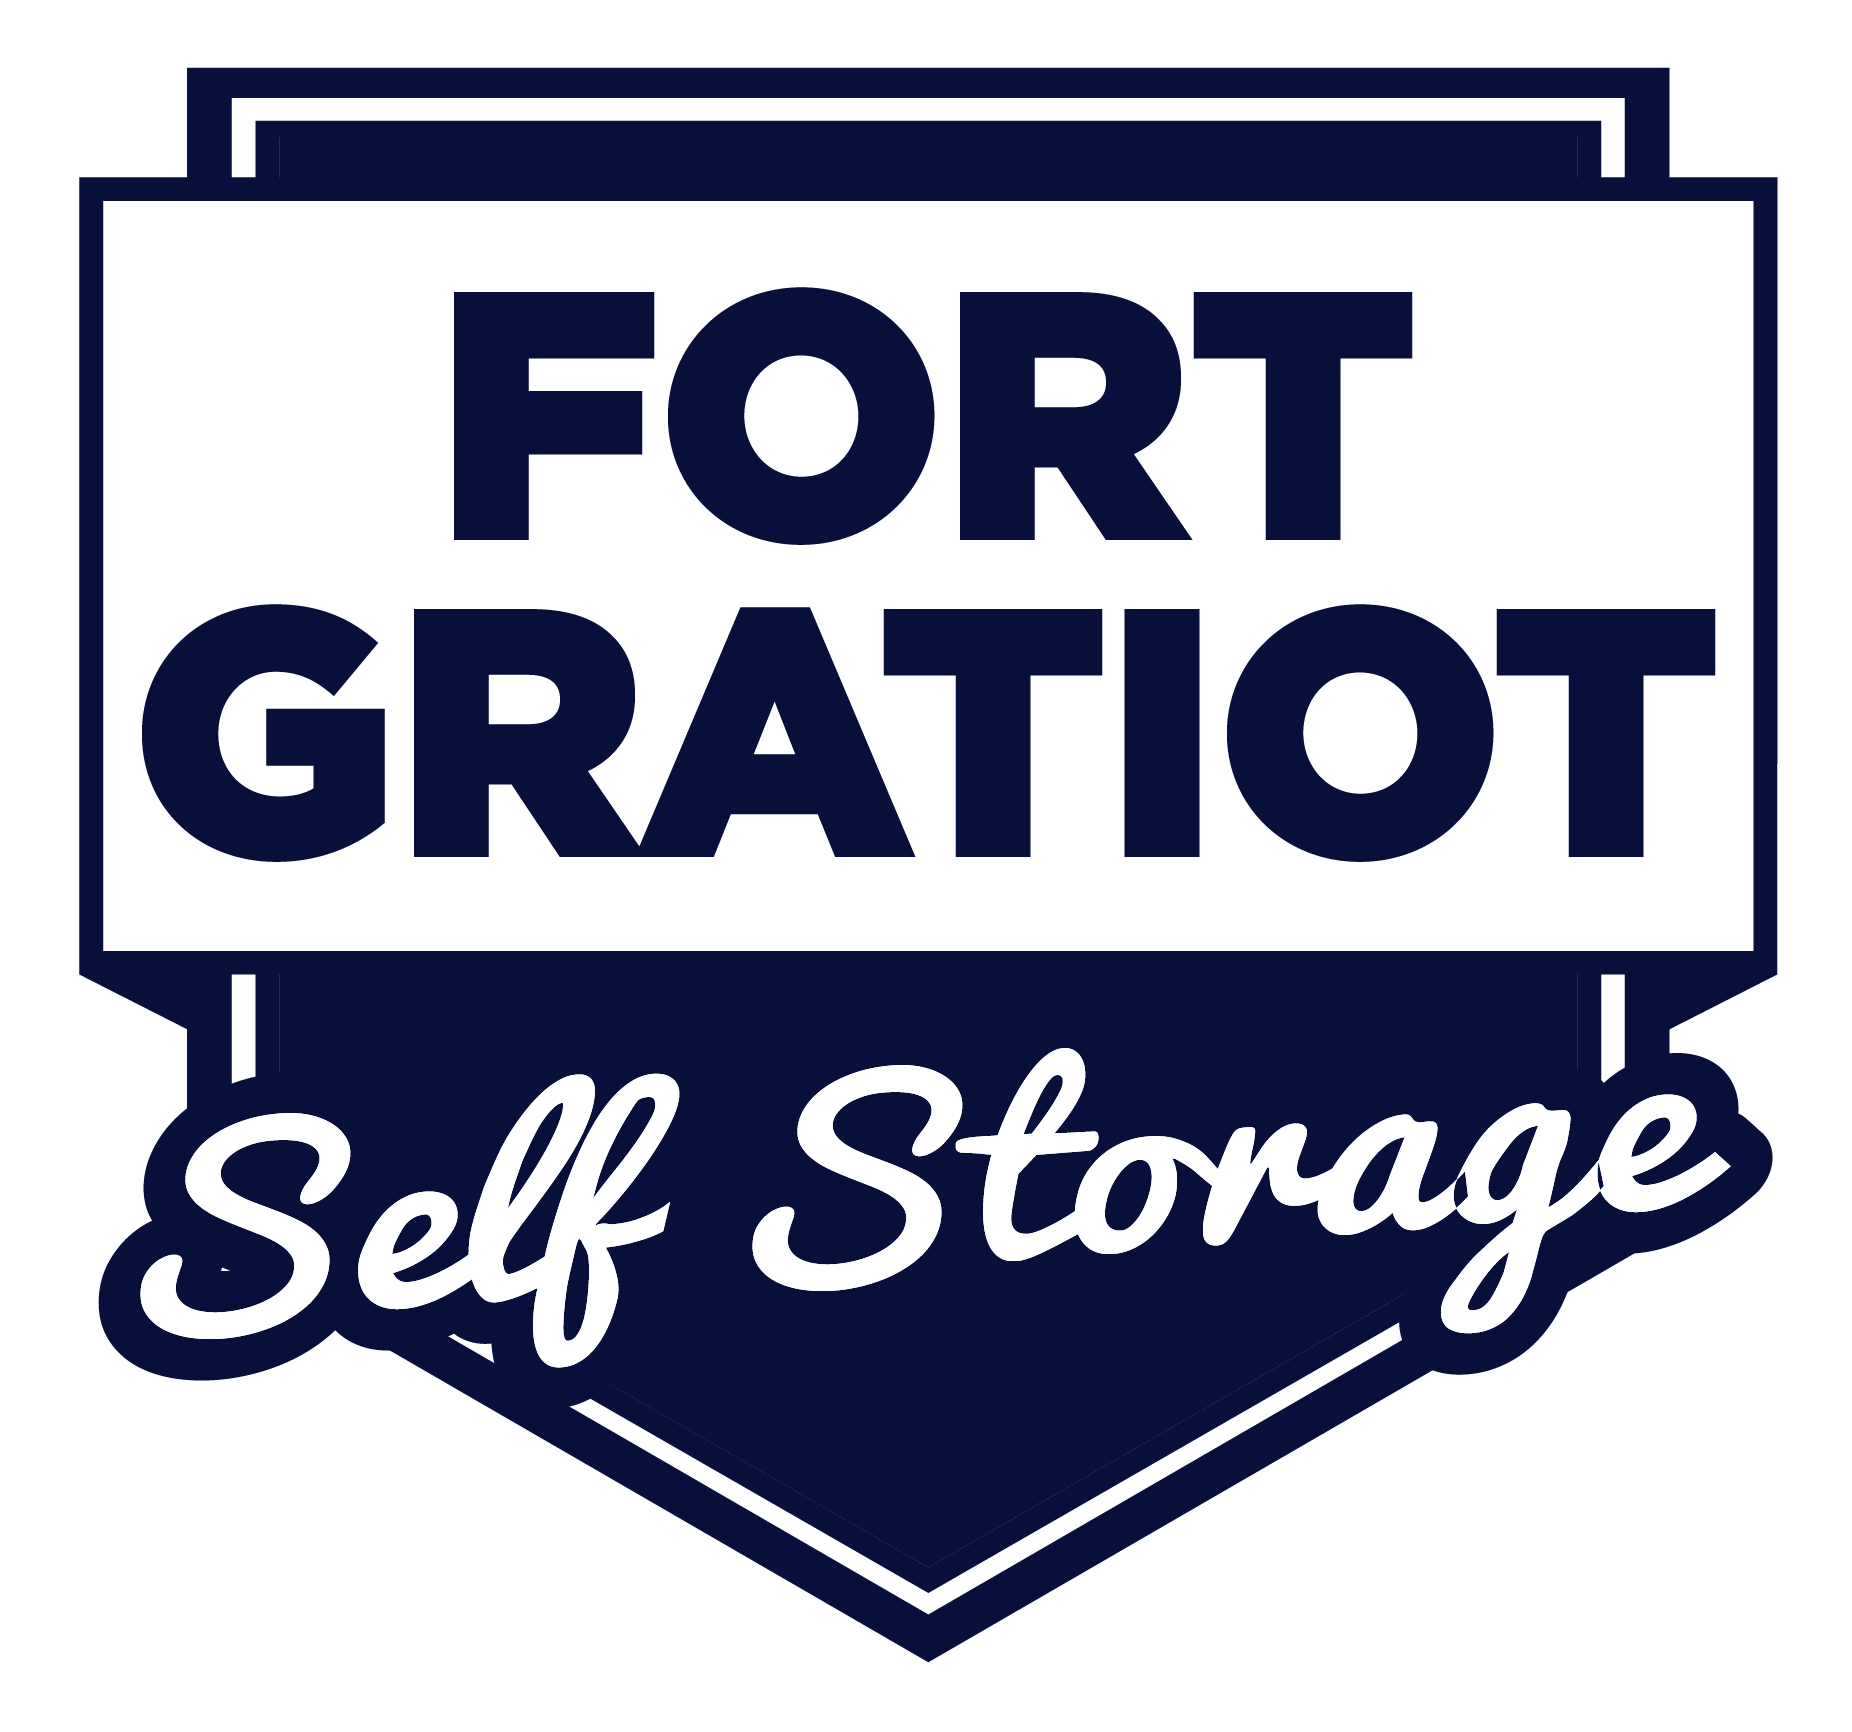 Fort Gratiot Self Storage